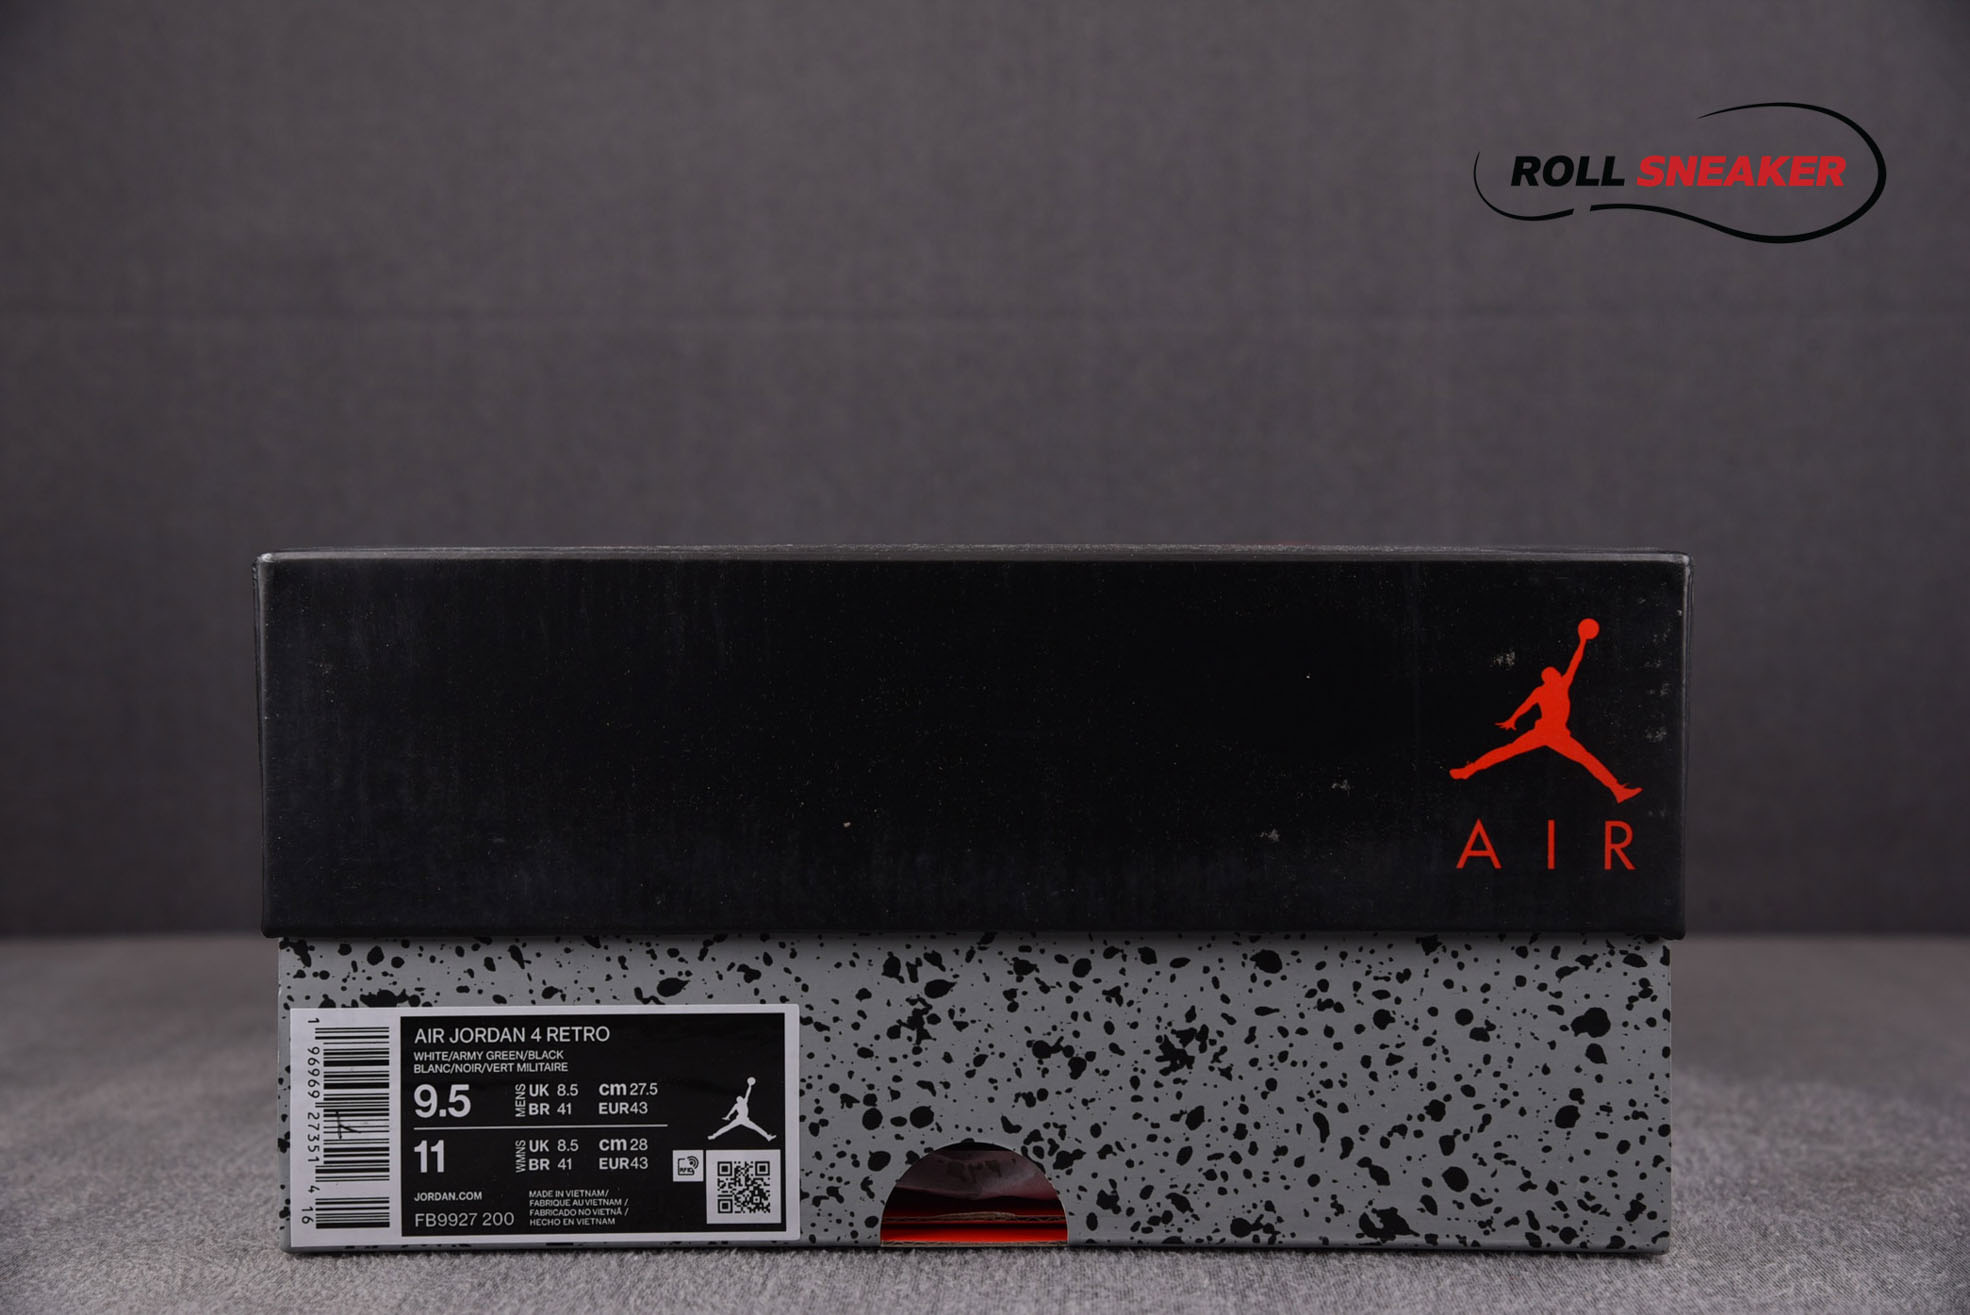 Nike Air Jordan 4“Olive Canvas”